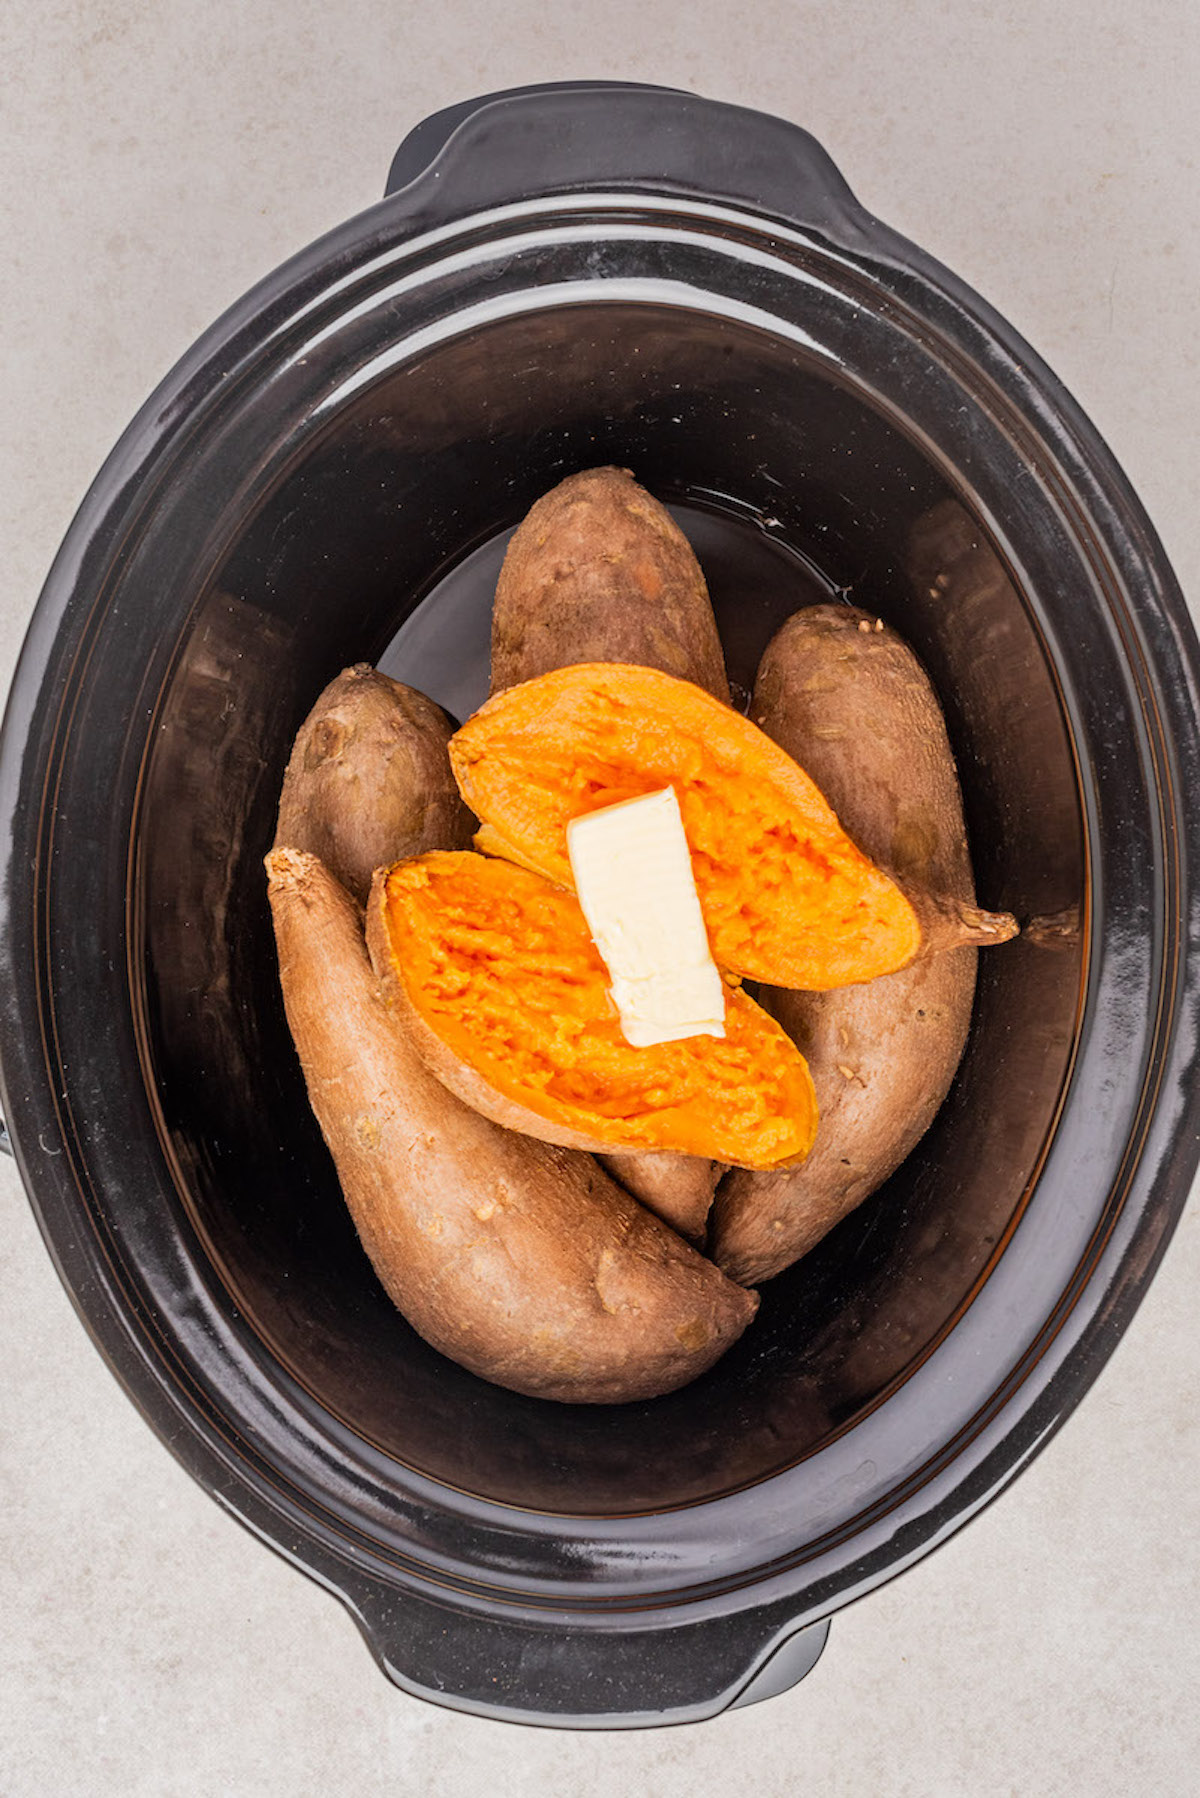 Crockpot Sweet Potatoes